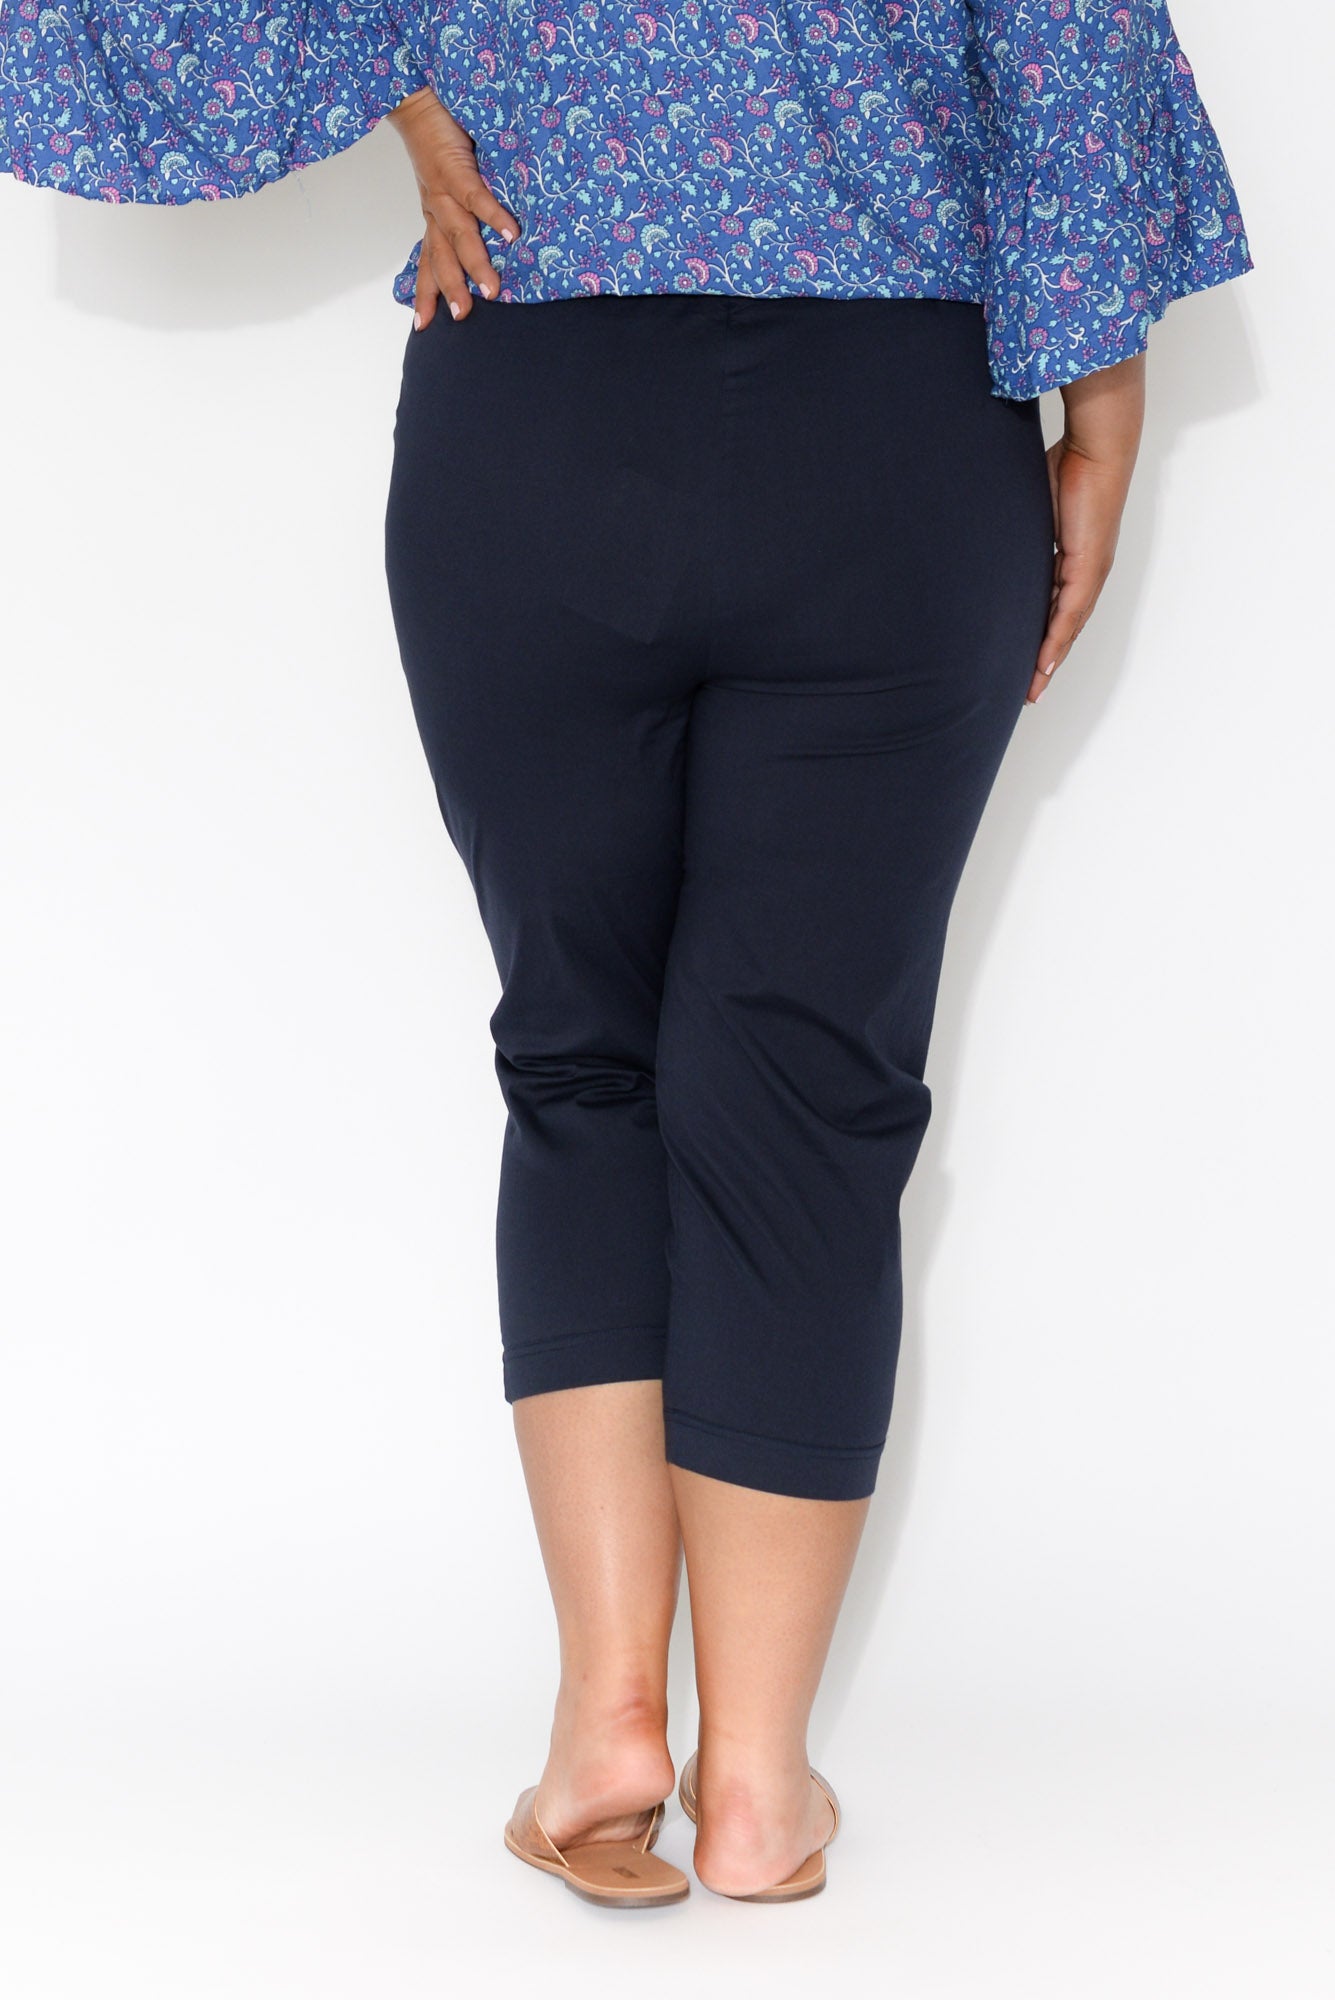 Latest Capri Designs  black Capri Designs  Trousers Bottom Designs  Pants  women fashion Fashion week outfit Womens pants design